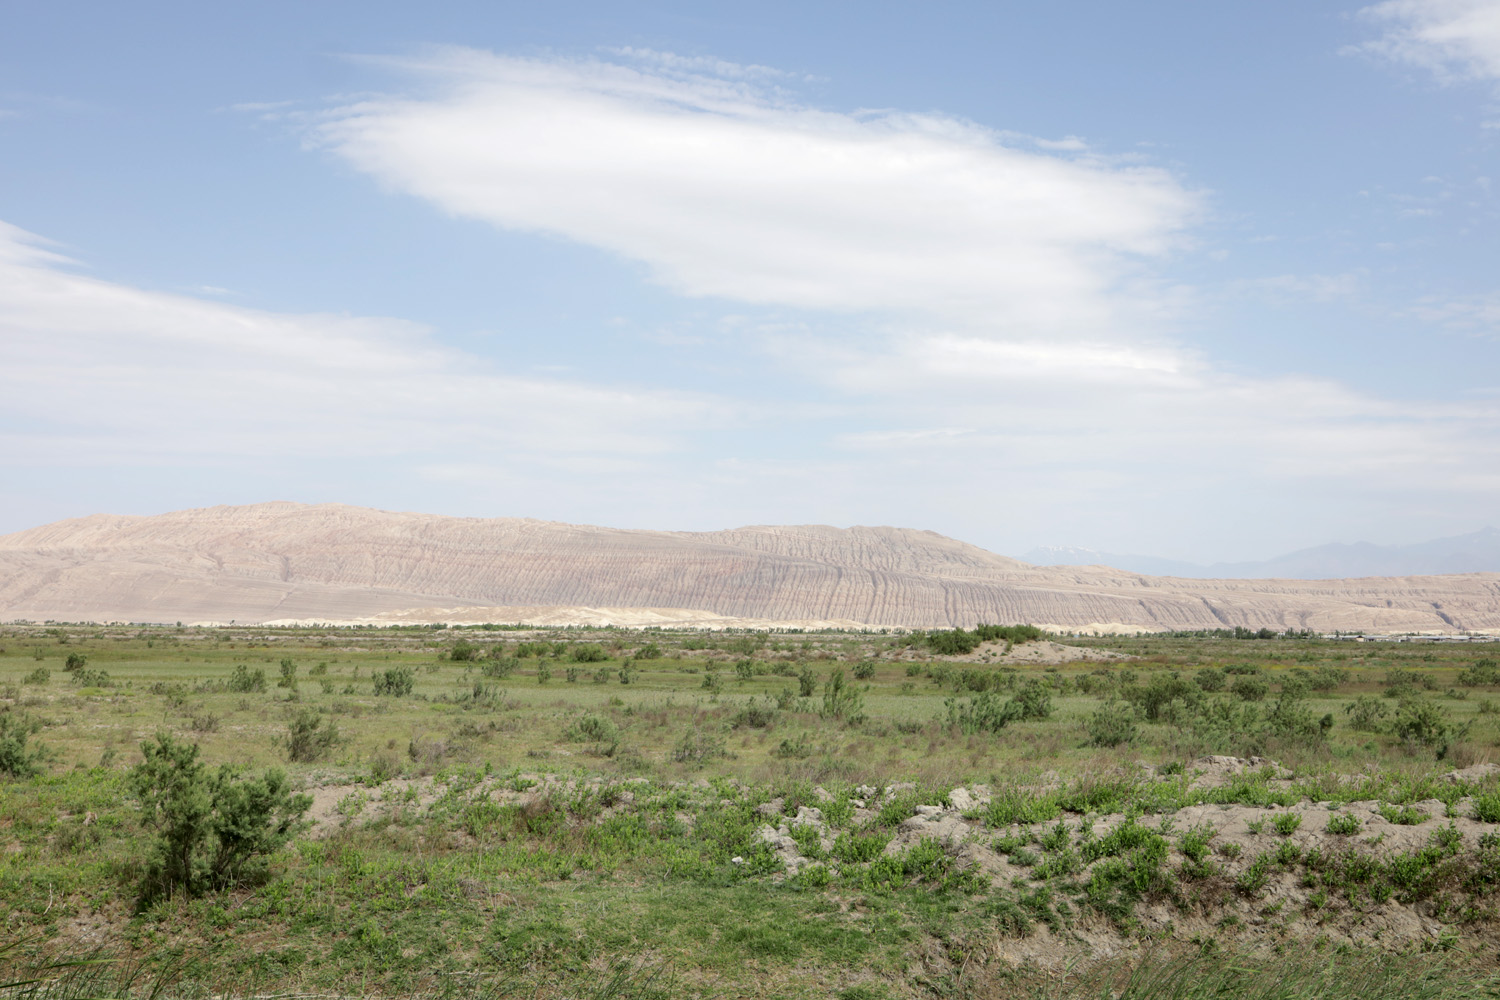 Окрестности кишлака Шадаказык, изображение ландшафта.